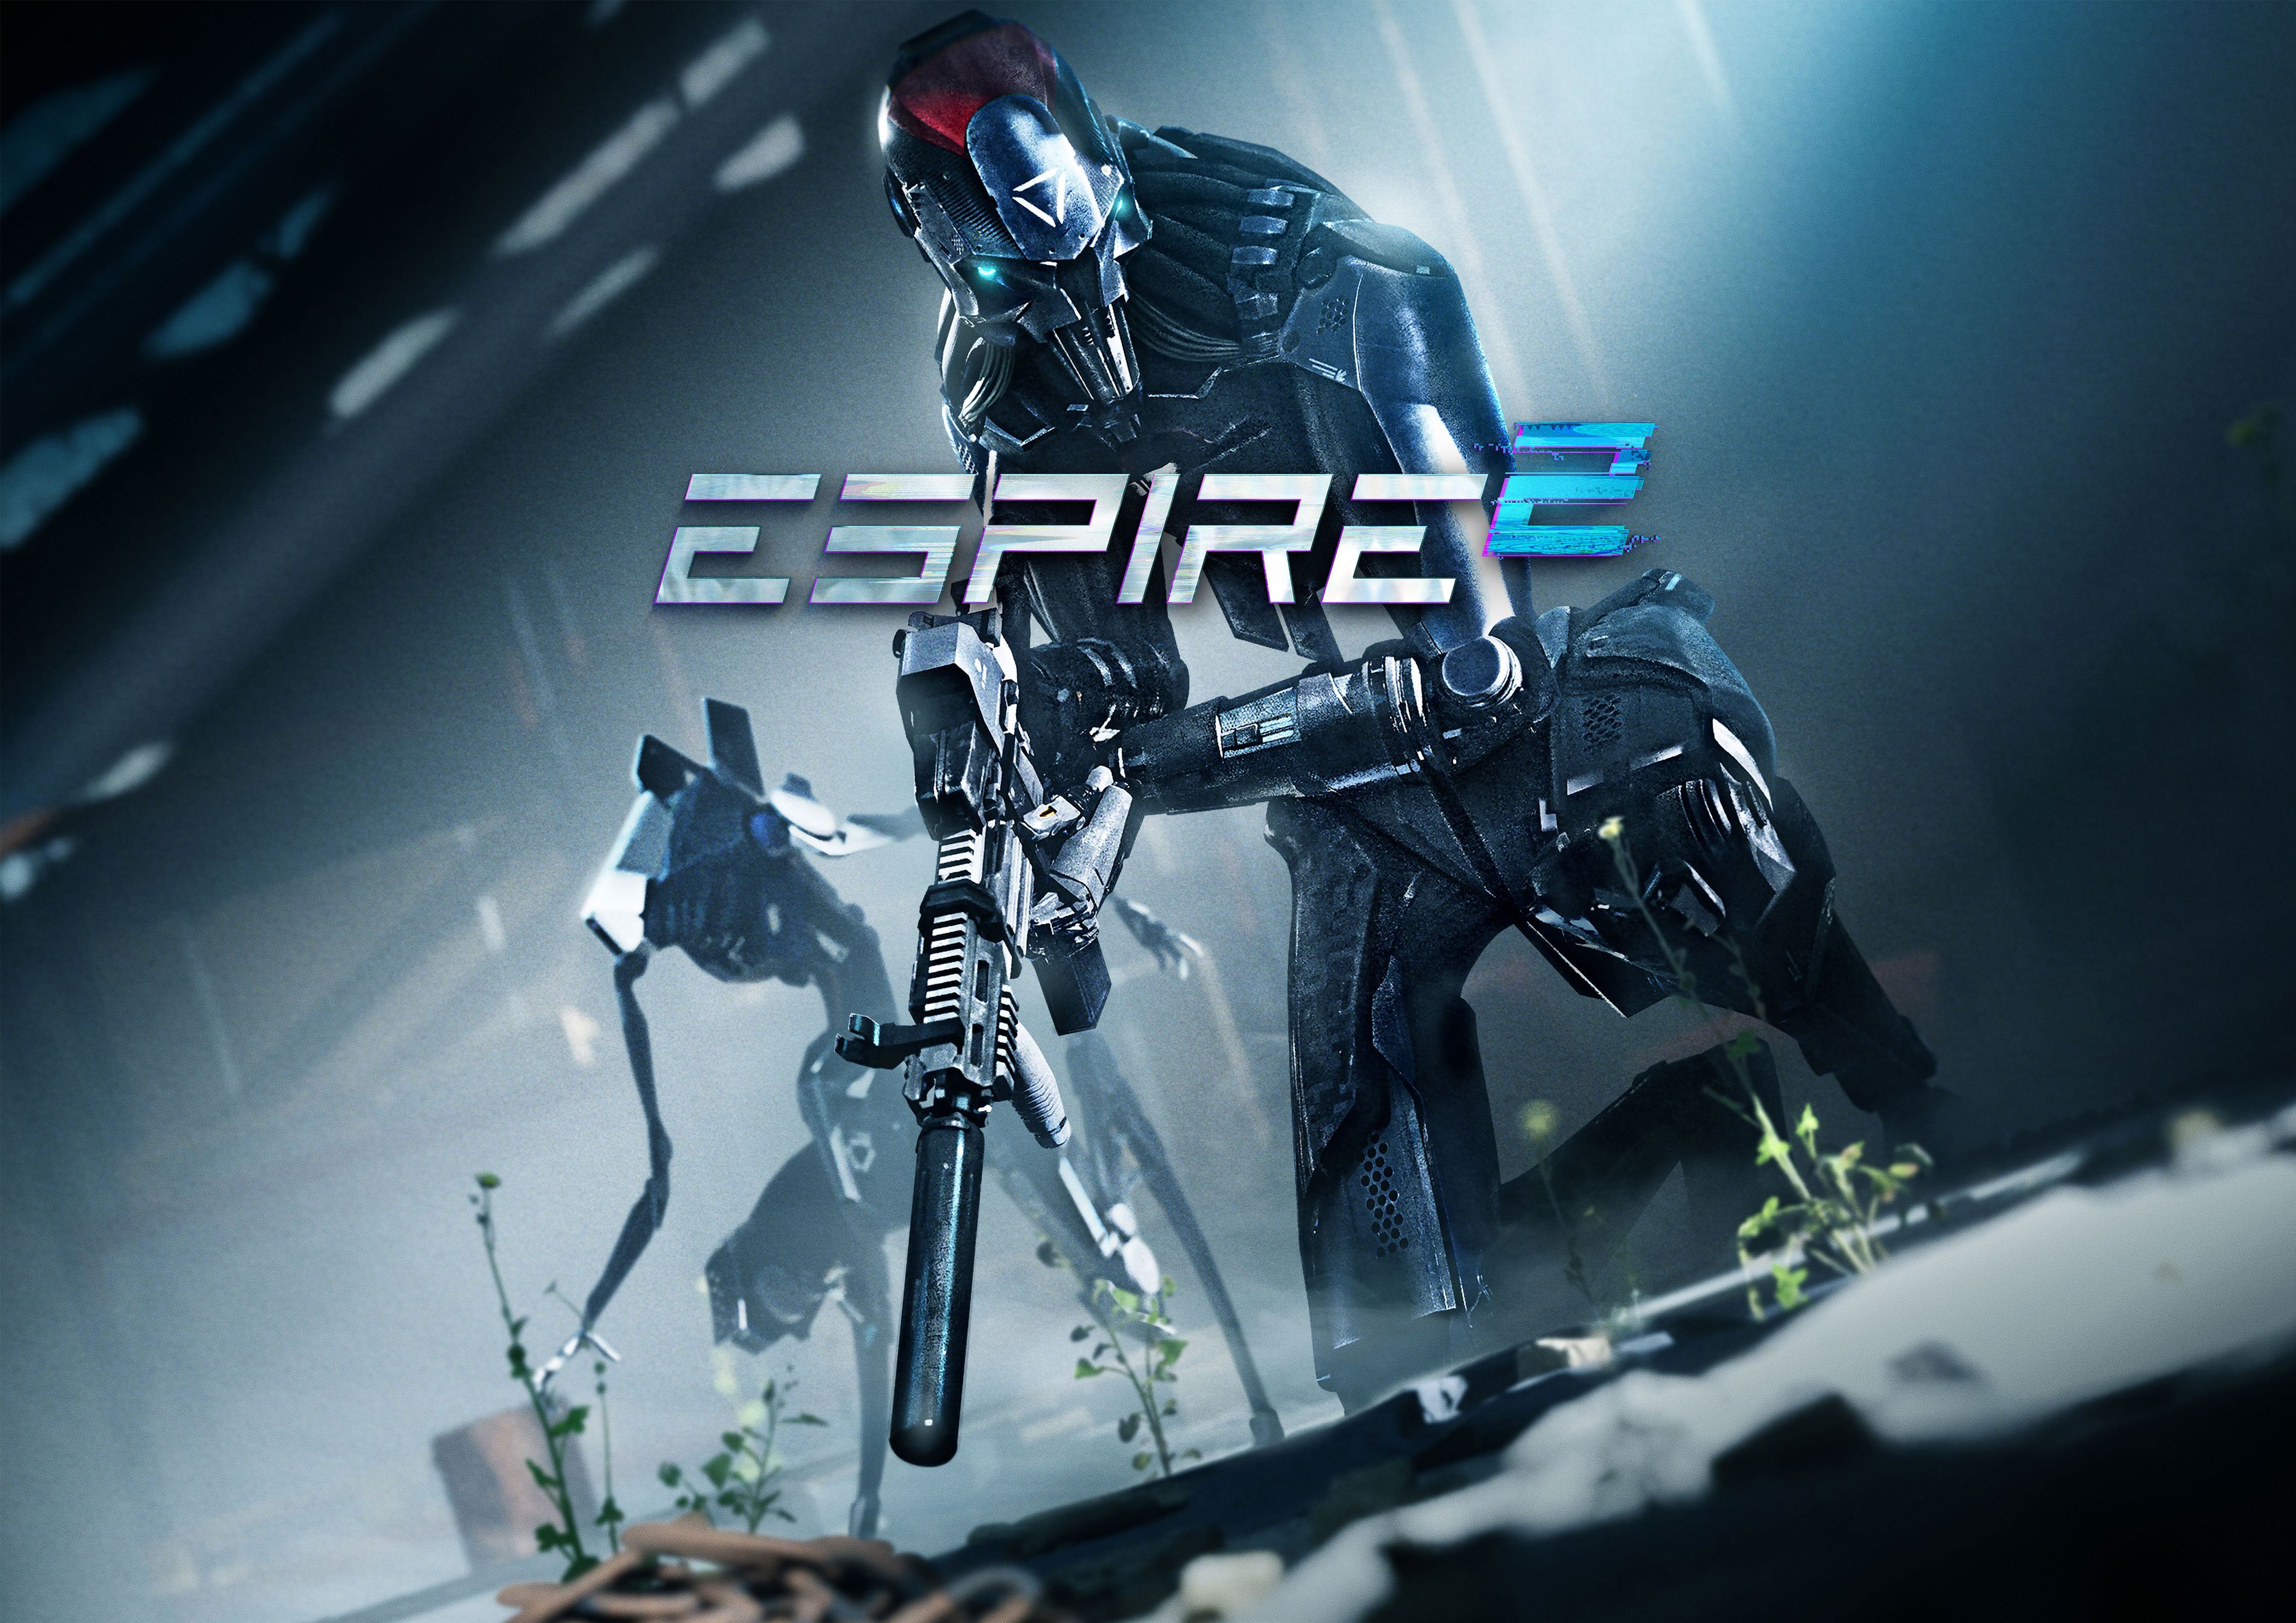 Espire 2 Meta Game Showcase